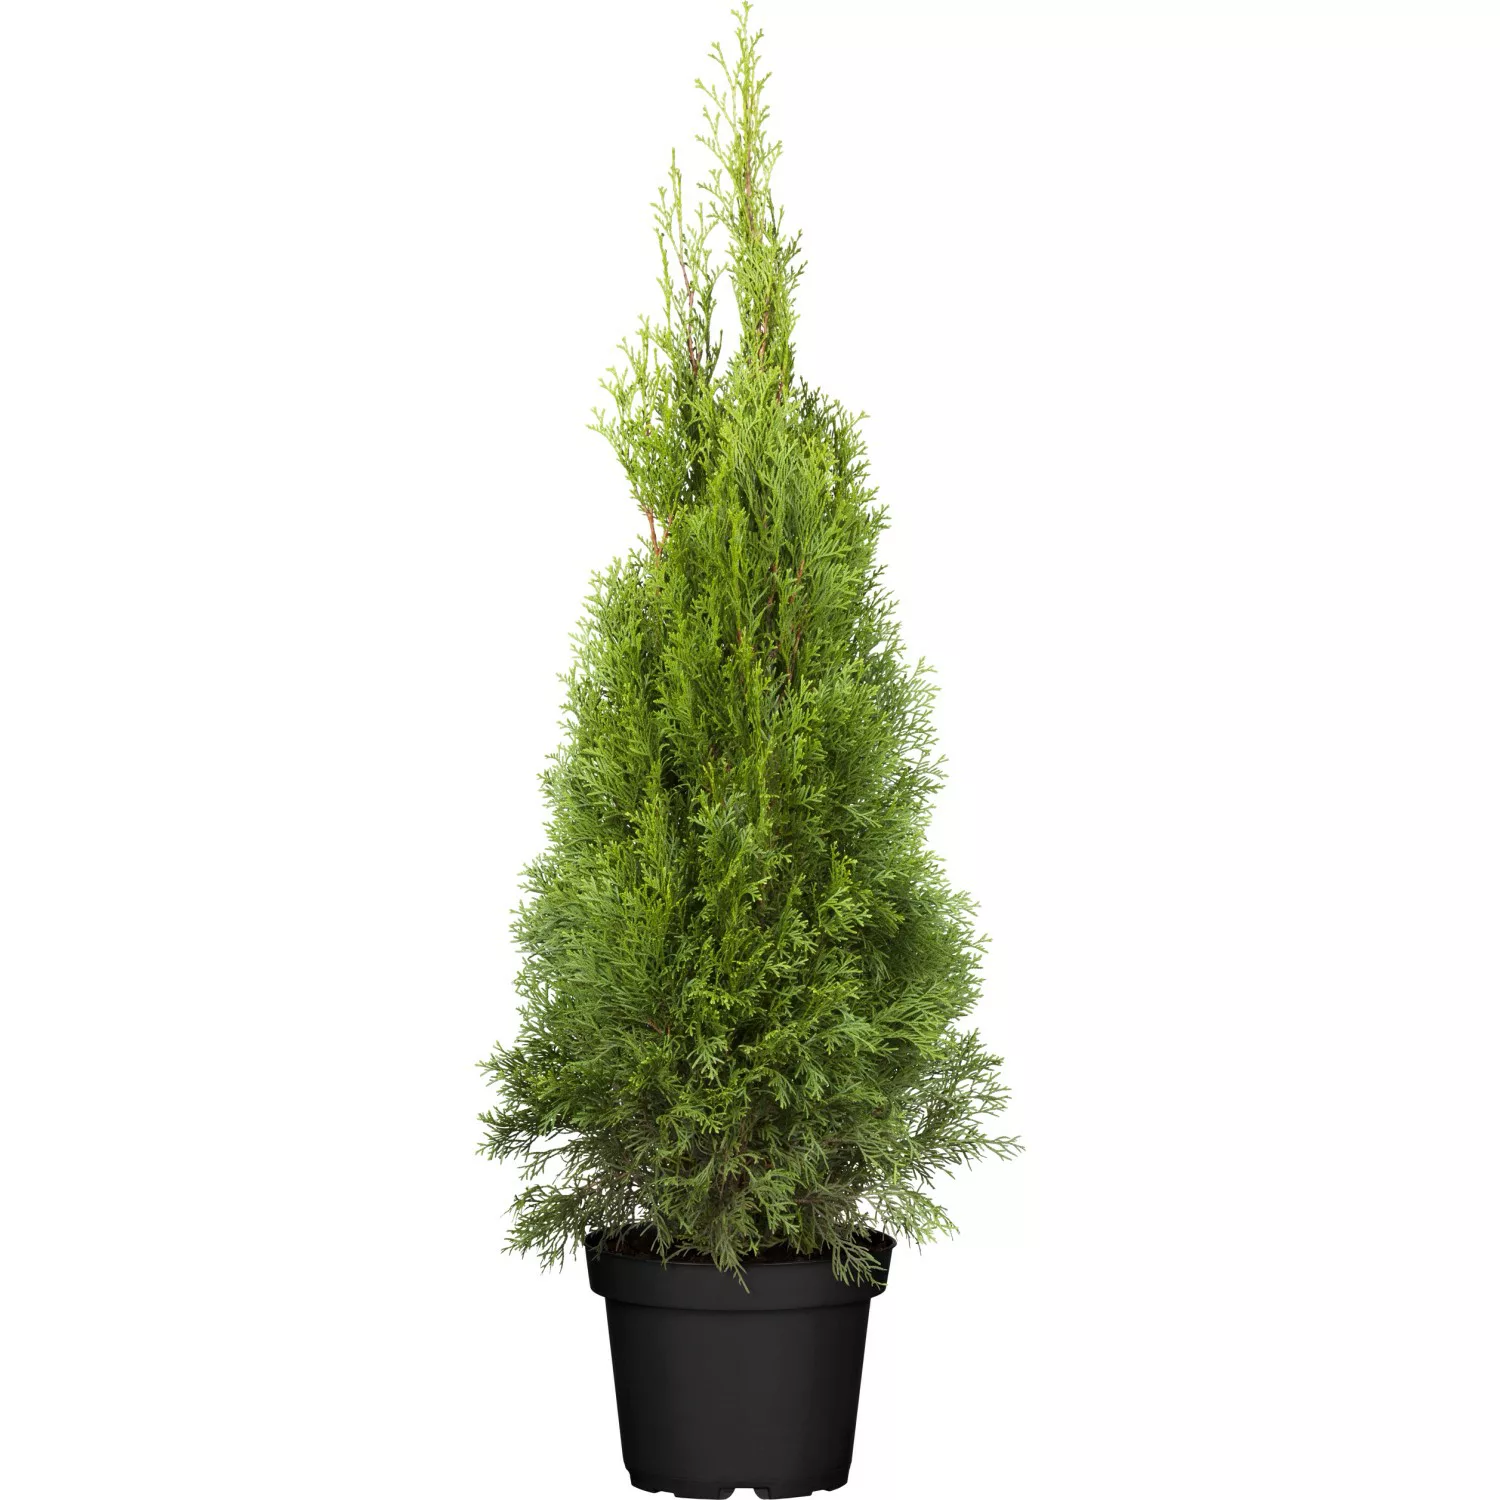 OBI Lebensbaum Smaragd Höhe ca. 80 - 100 cm Topf ca. 7,5 l Thuja günstig online kaufen